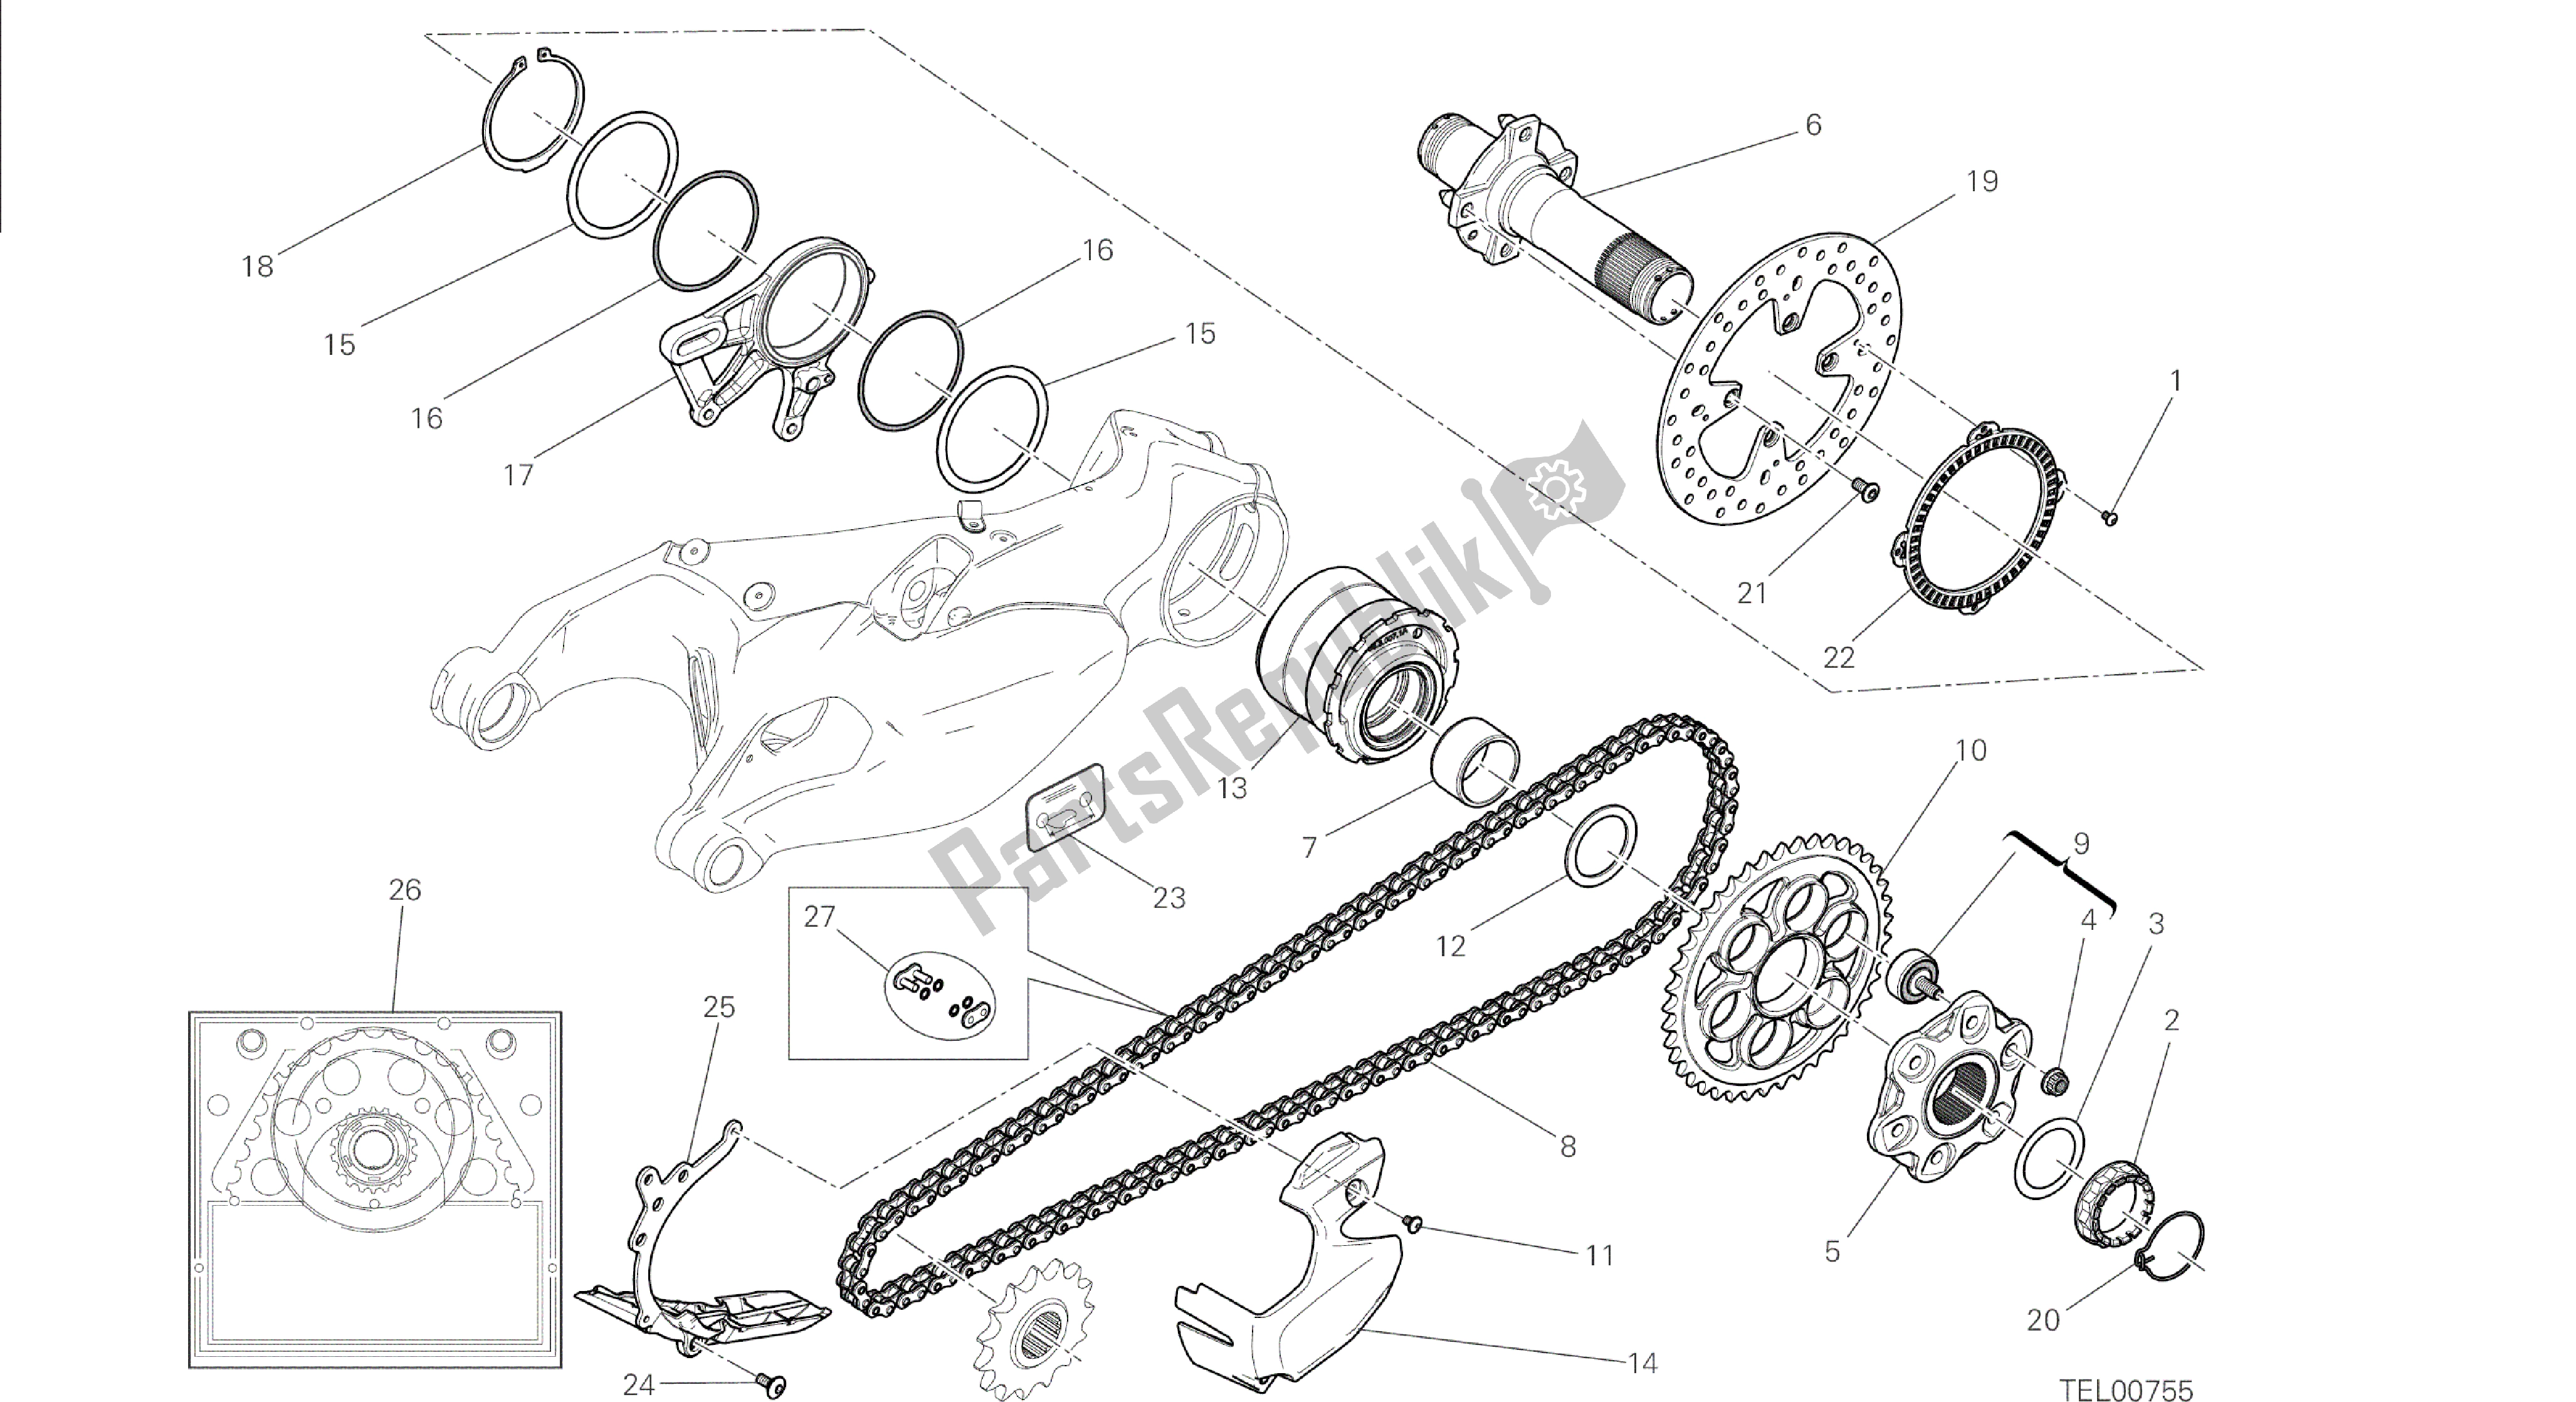 Alle onderdelen voor de Tekening 26a - Achterwielspindel [mod: 1299; Xst: Aus, Eur, Fra, Jap, Twn] Groepsframe van de Ducati Panigale 1299 2015